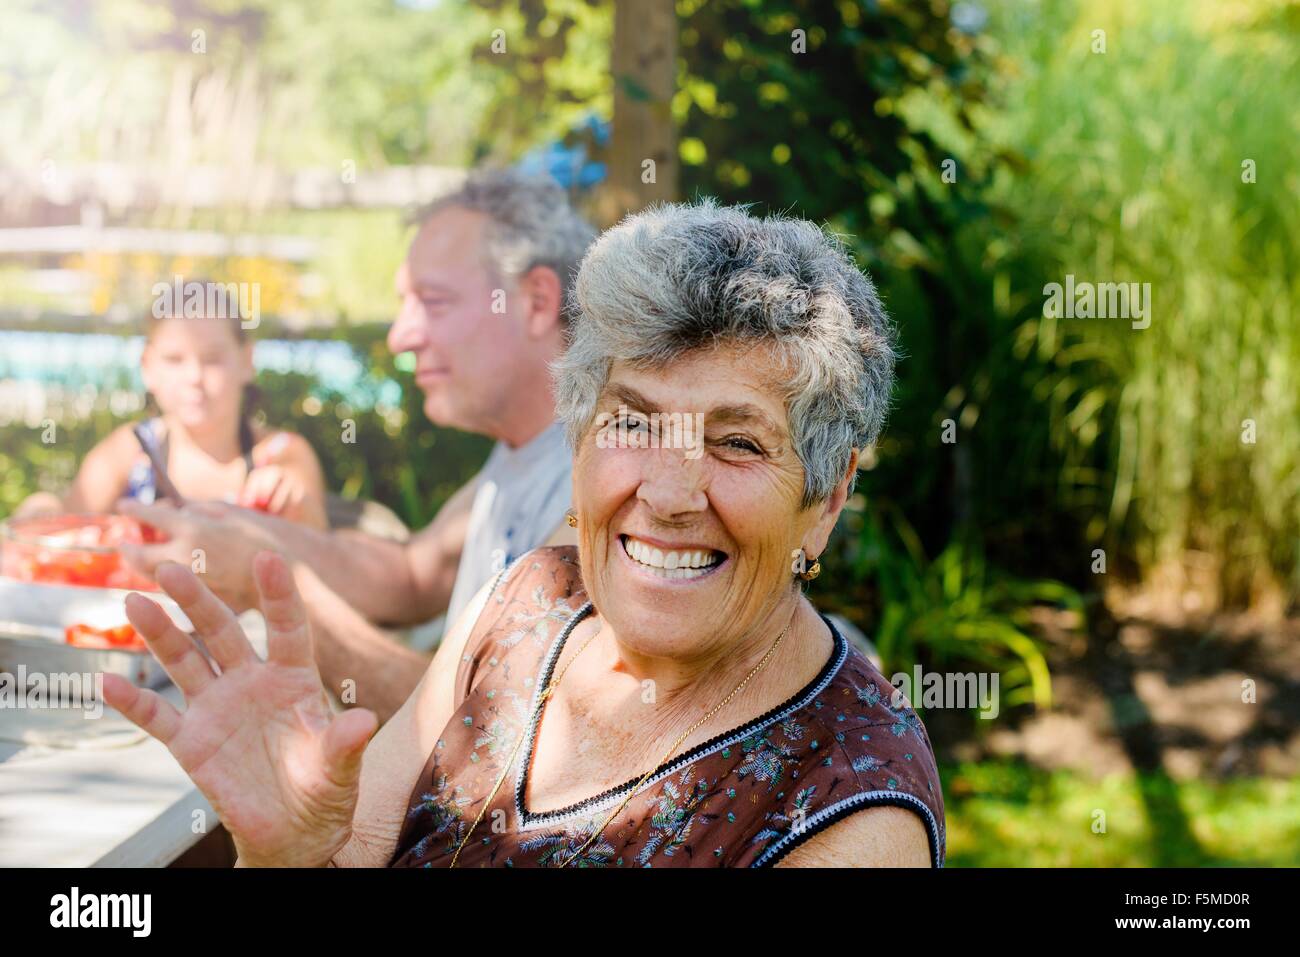 Senior woman outdoors with family looking at camera waving, smiling Stock Photo